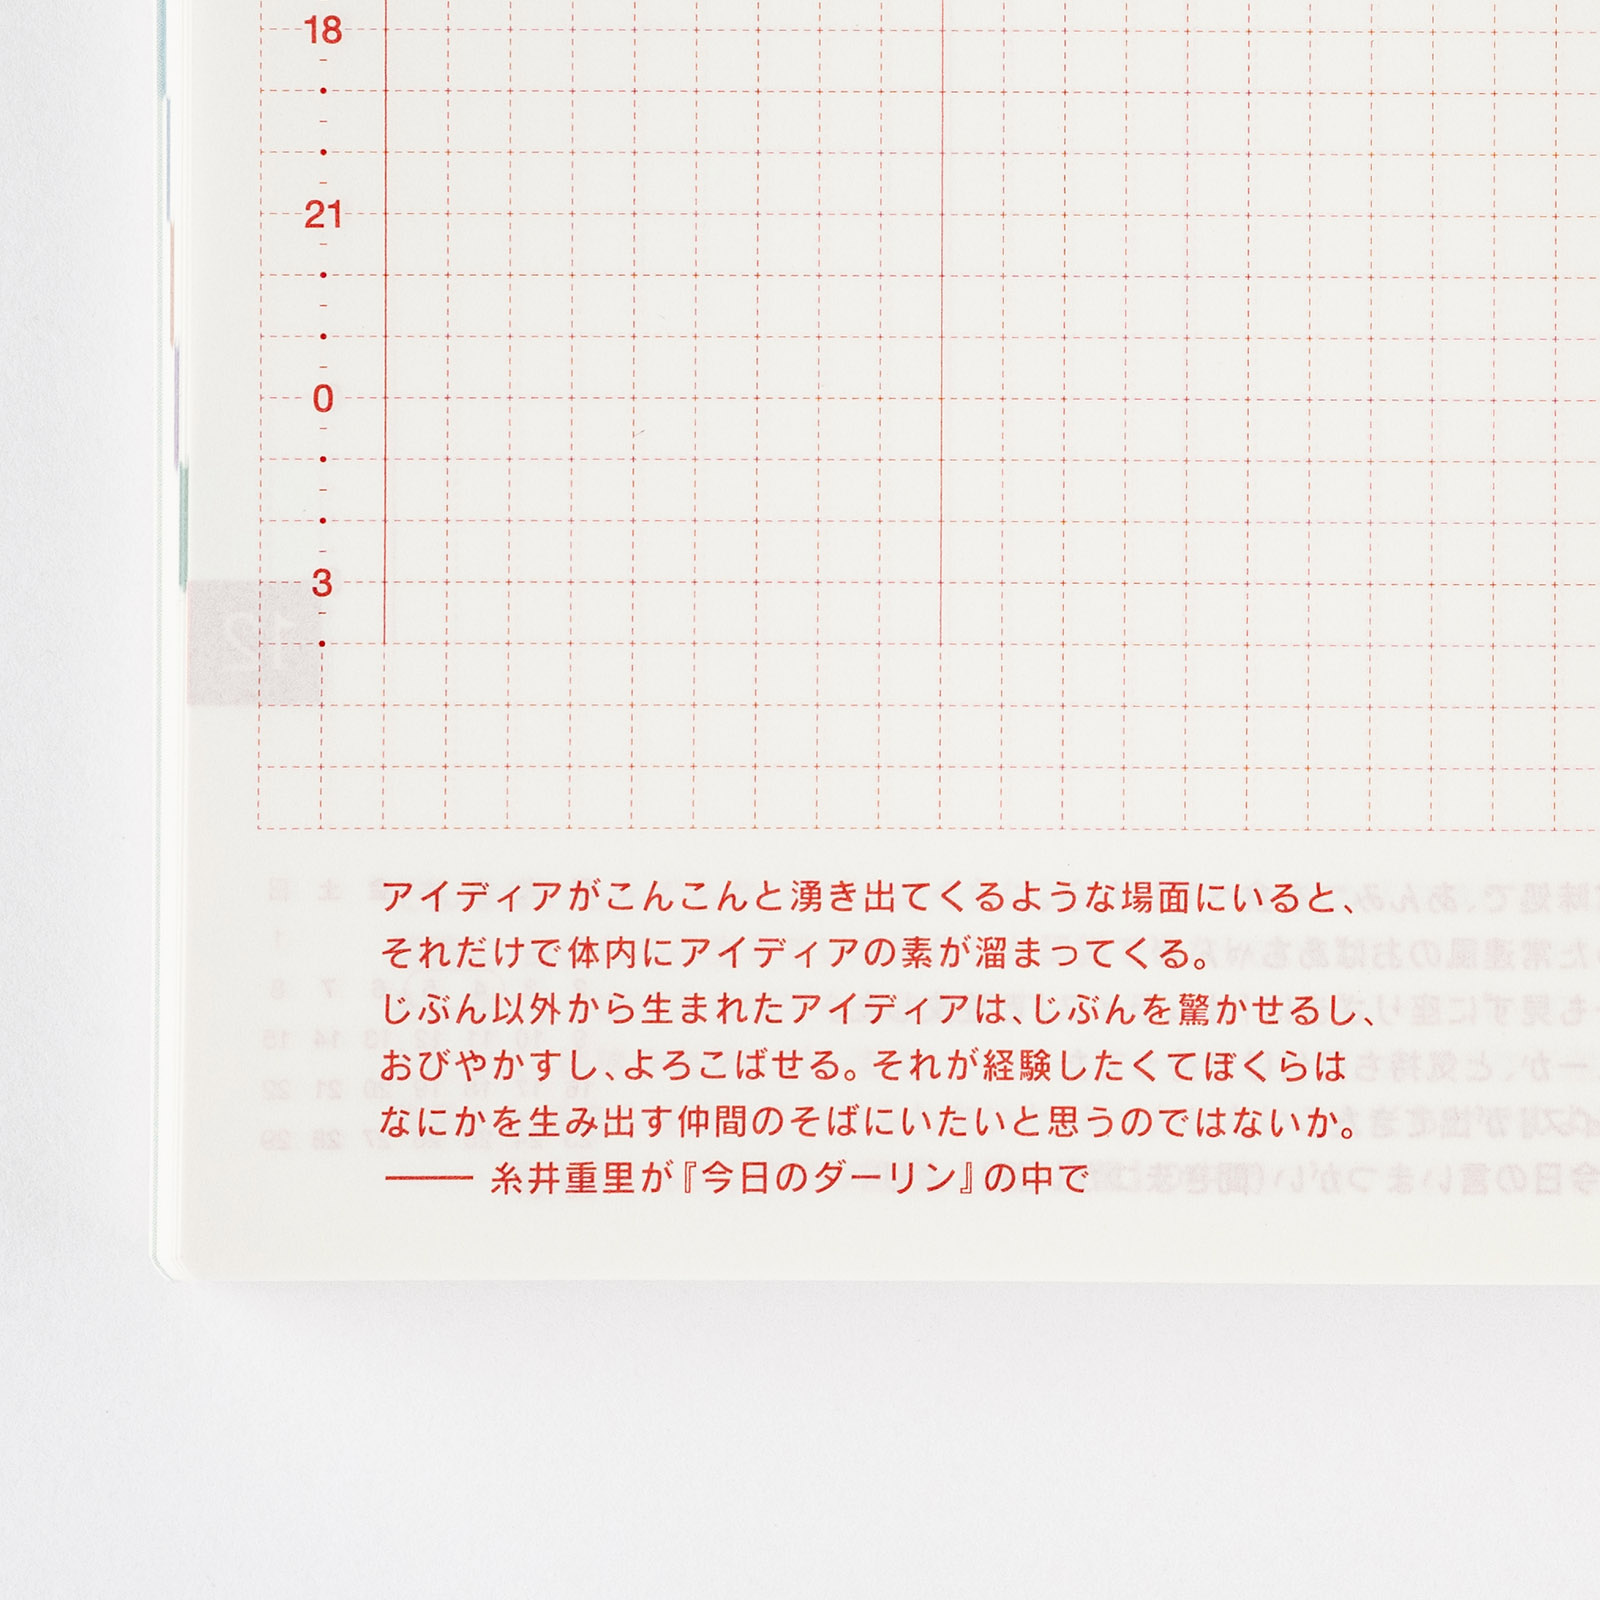 Hobonichi-a6-book-original-jp-5